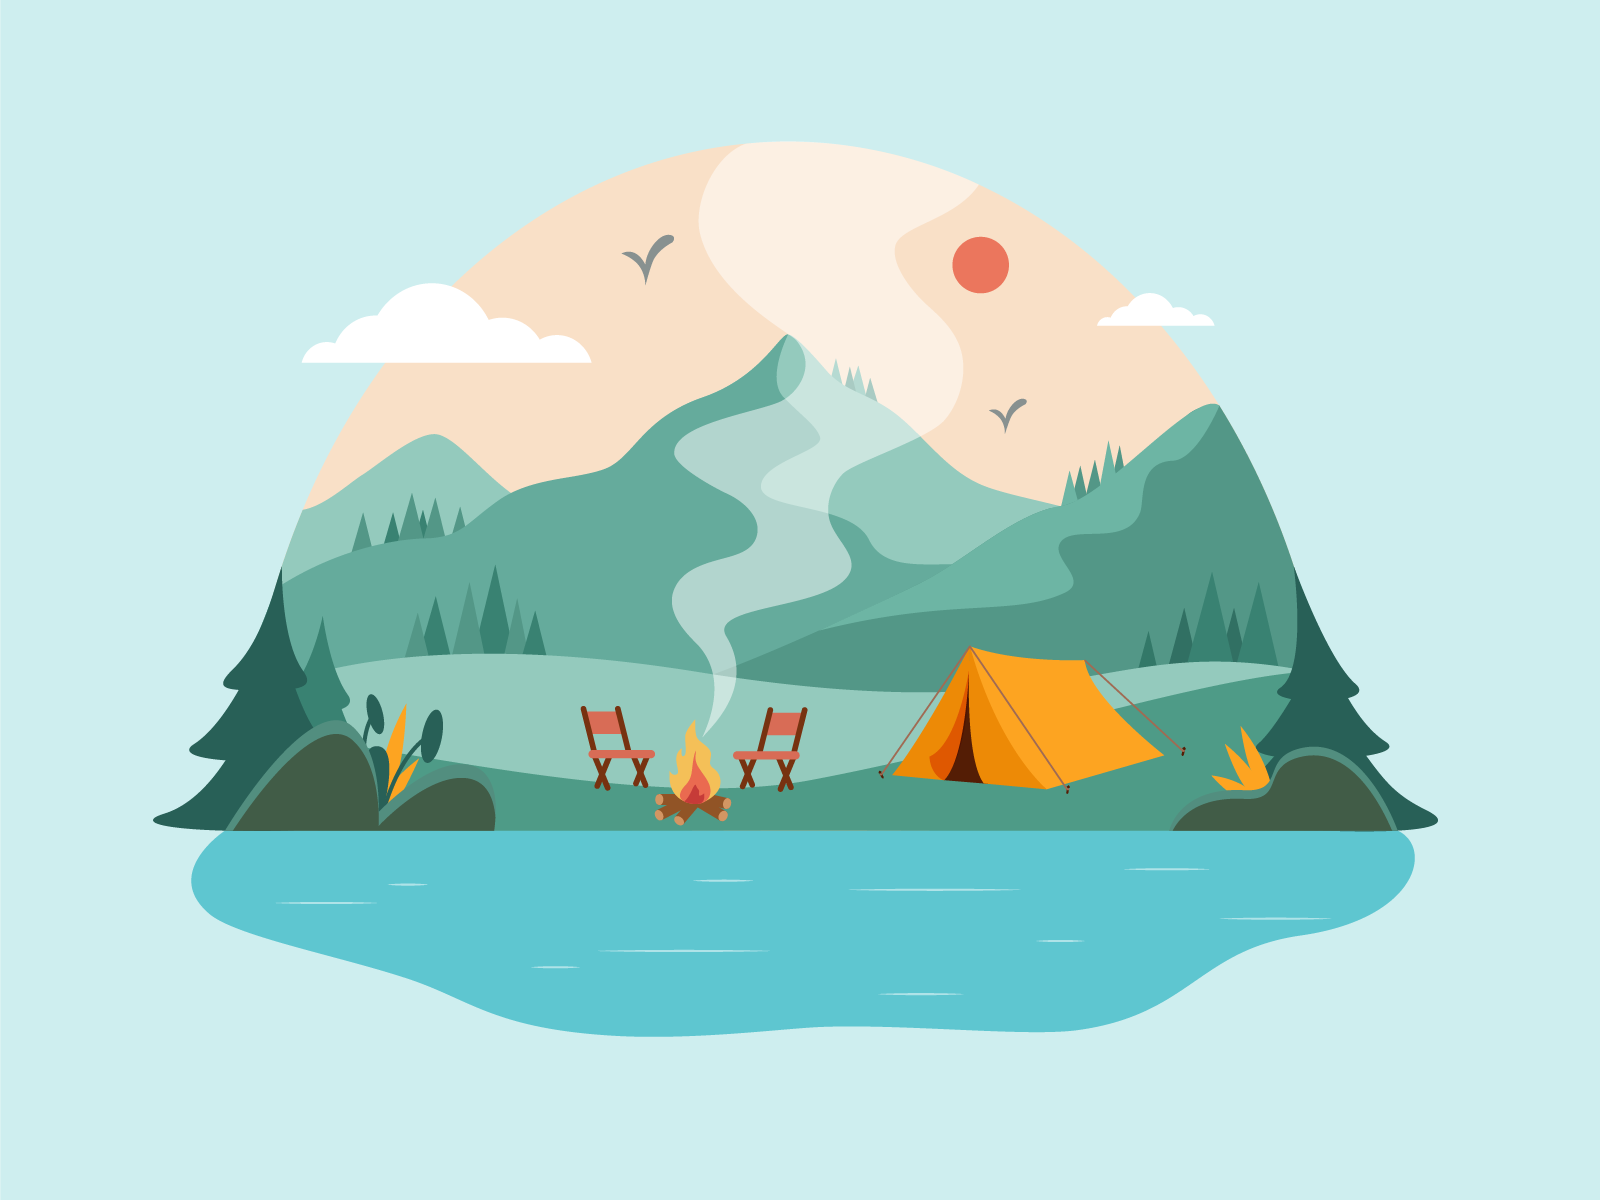 Camping concept art by Alona Roshka on Dribbble